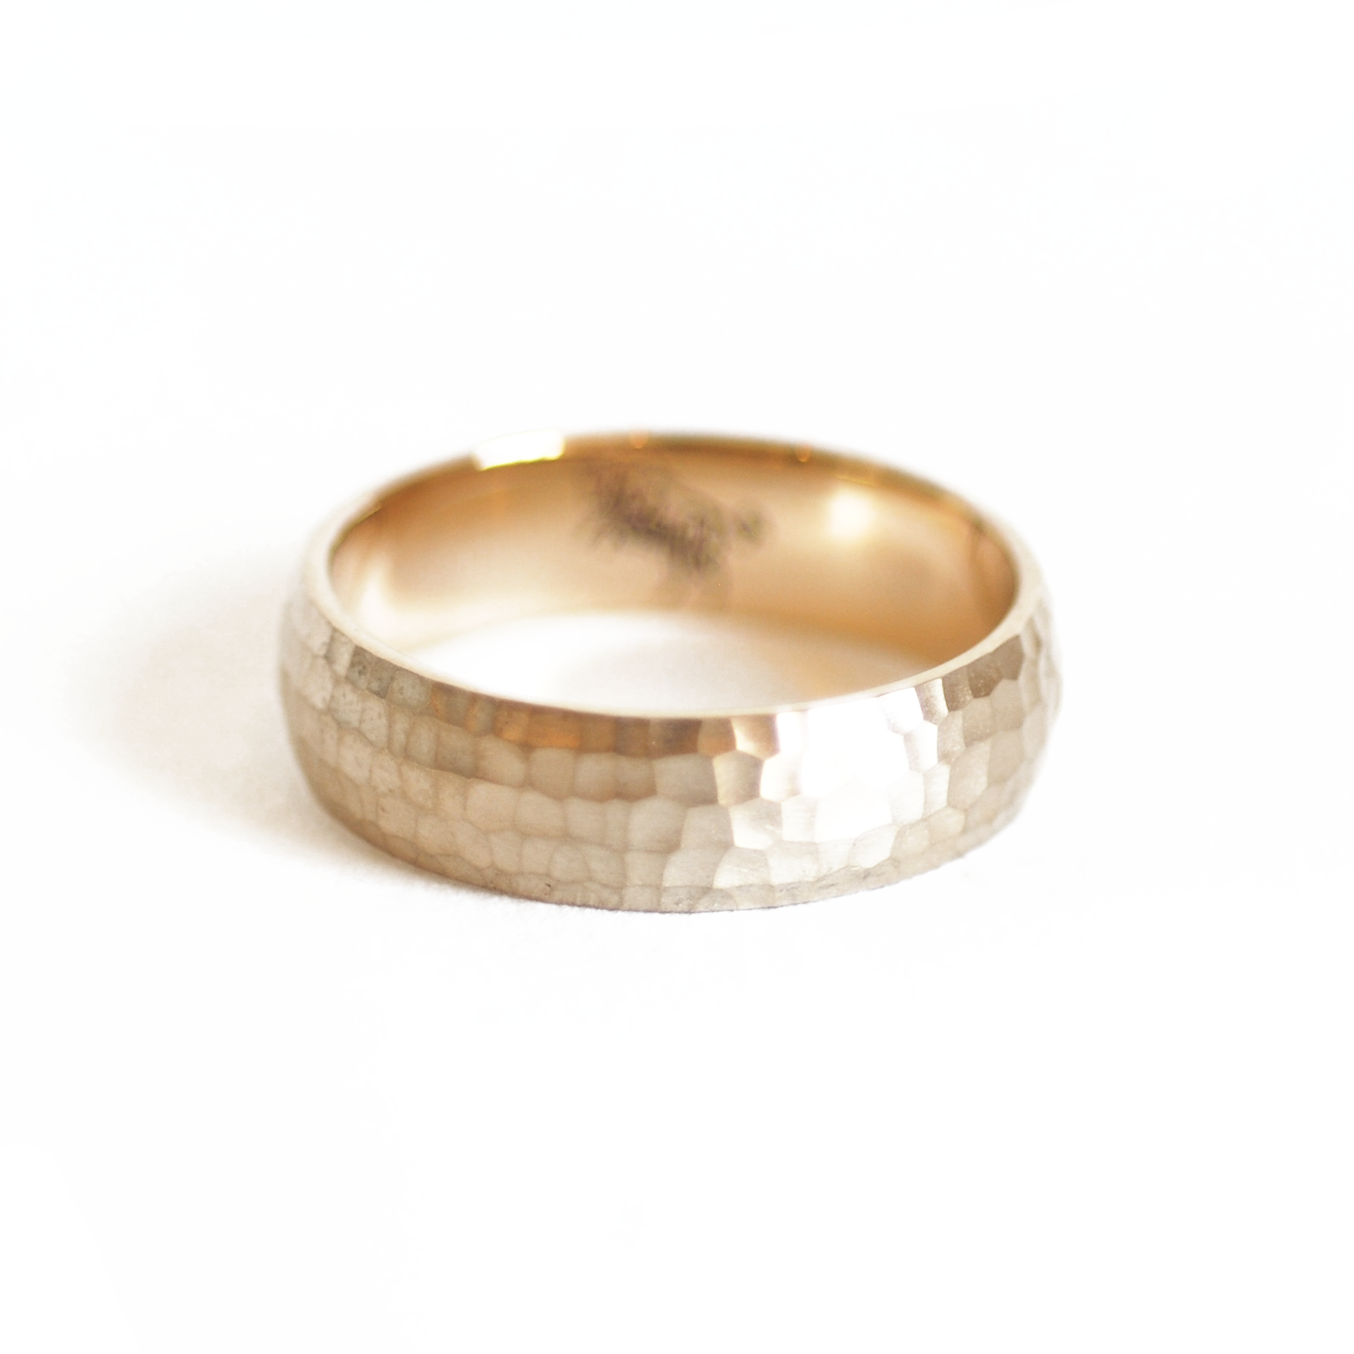 Family Seal Satin Hammered Mens Wedding Ring